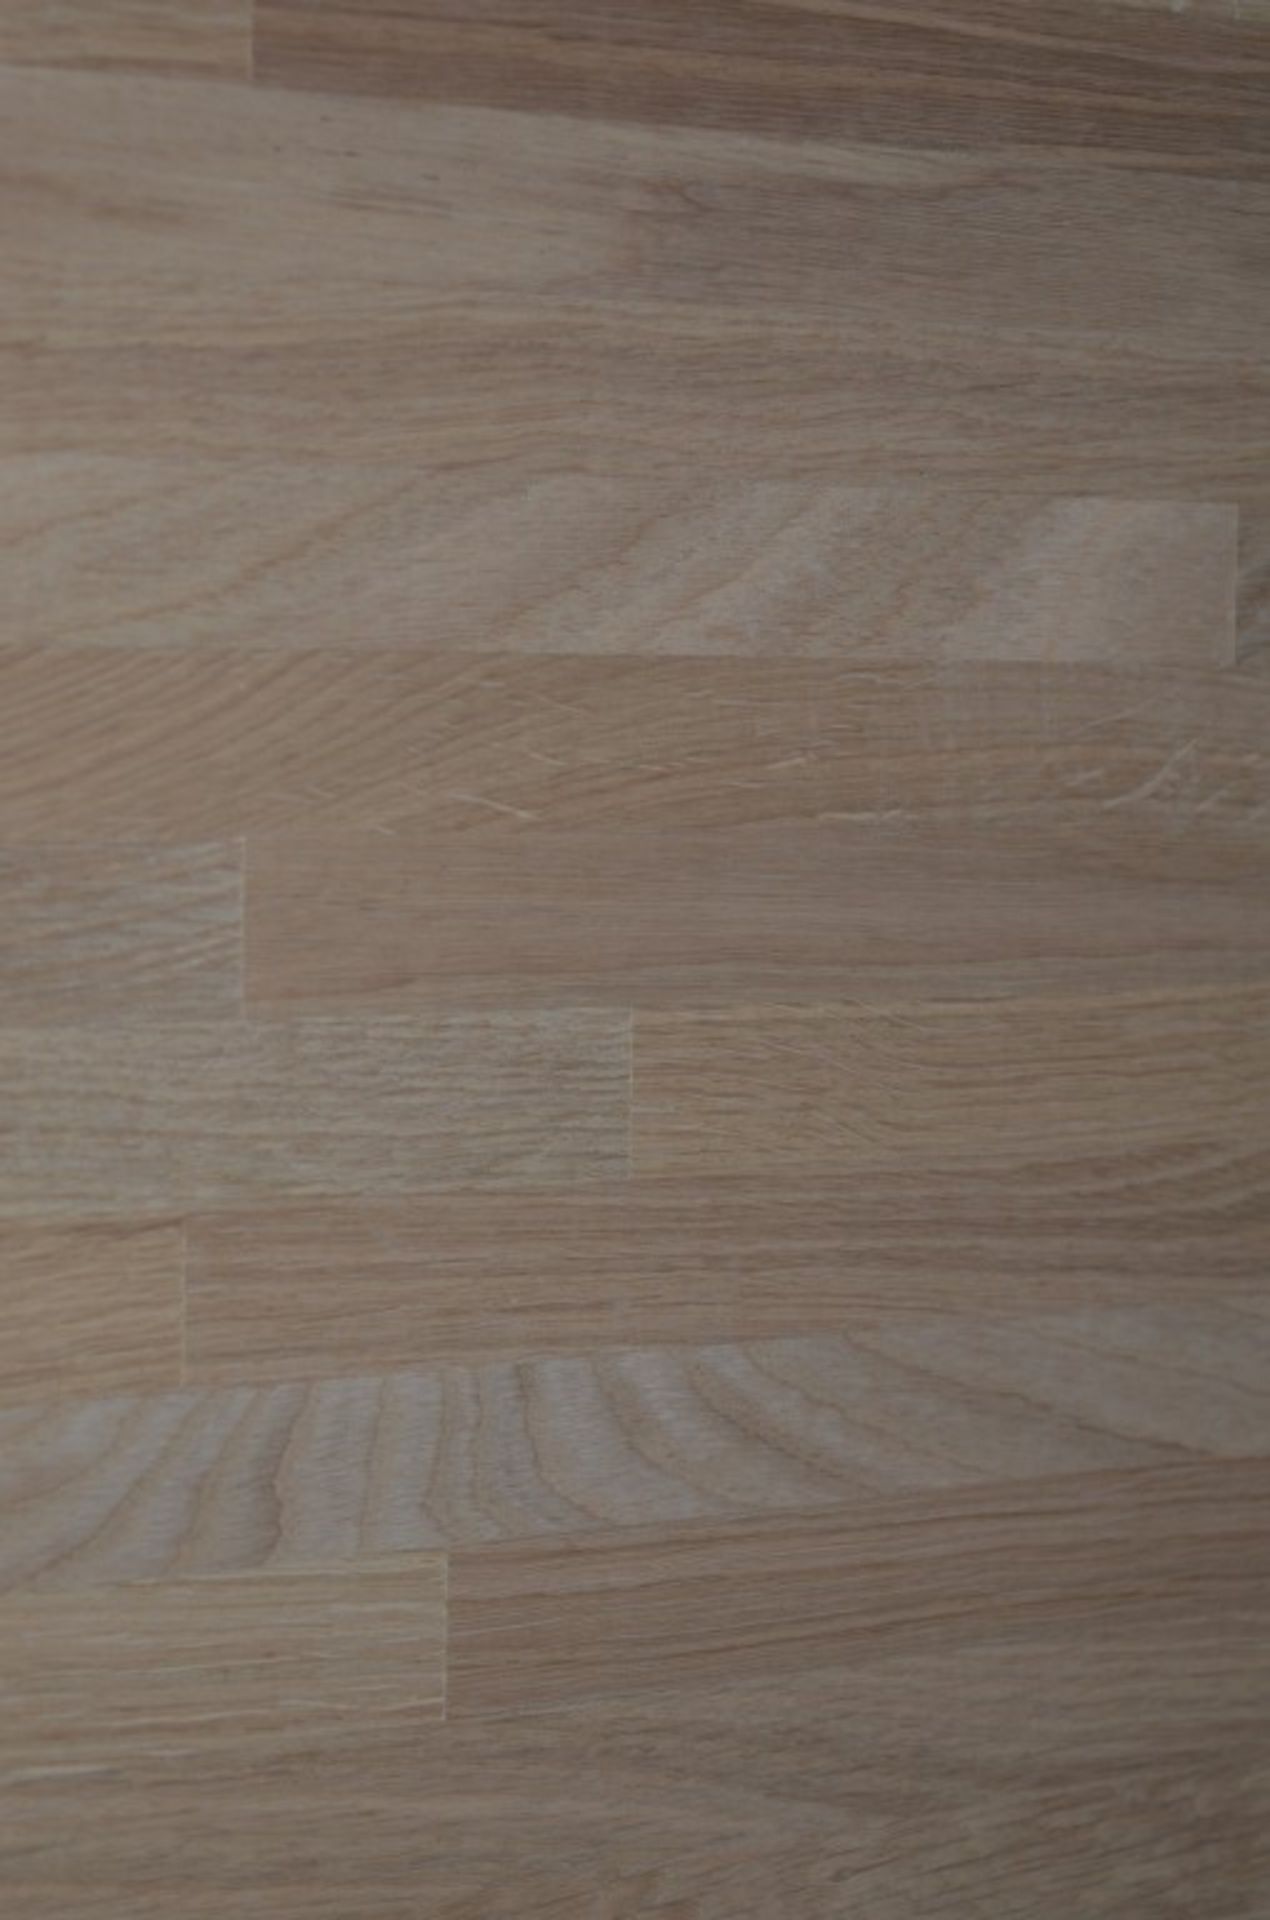 1 x Solid Wood Kitchen Worktop - OAK - Oak Blockwood Kitchen Worktop - Size: 3000 x 900 x 32mm - - Image 5 of 7